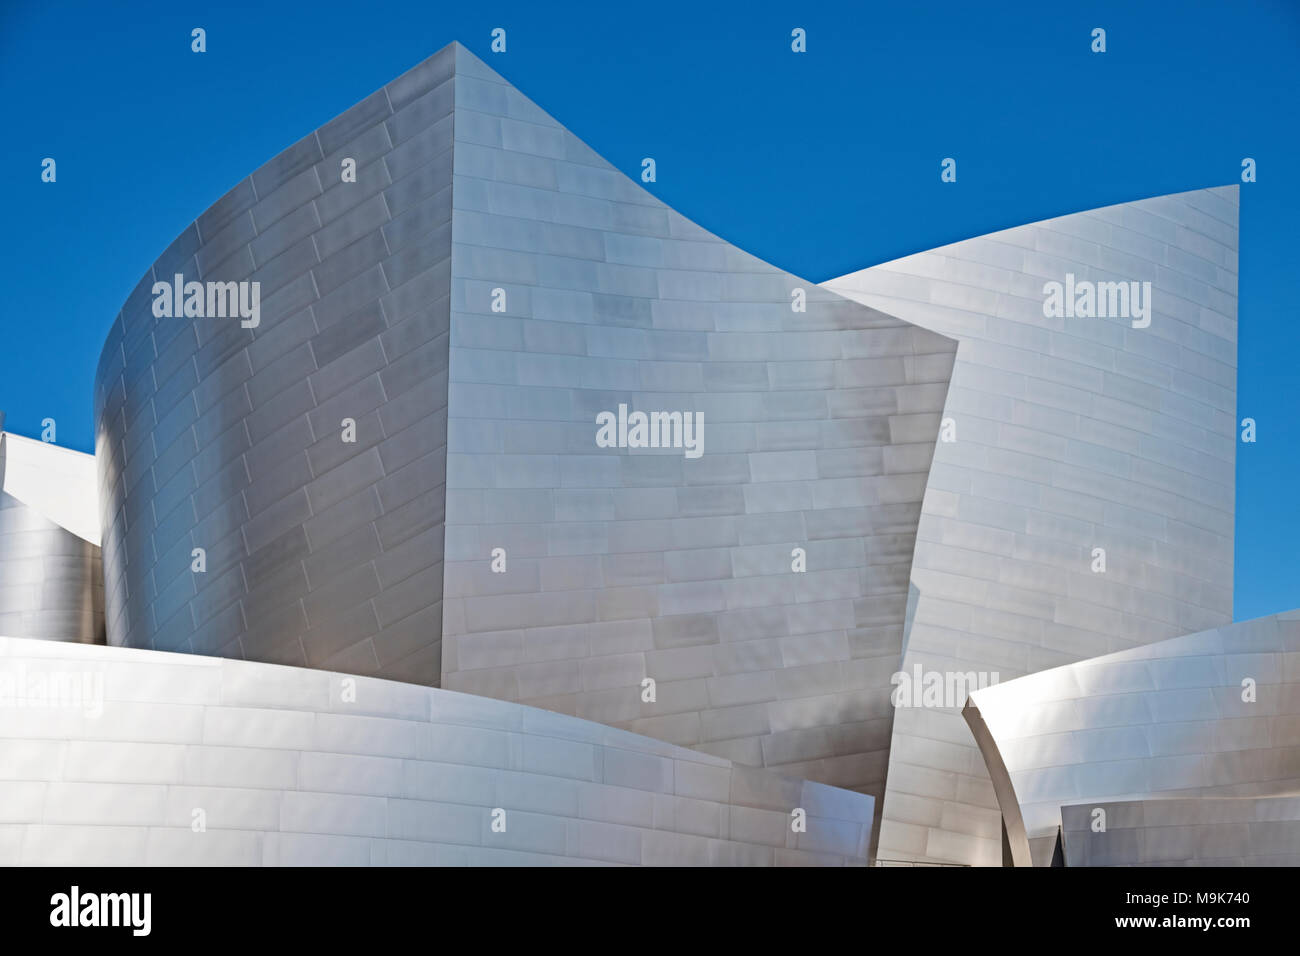 LOS ANGELES, USA - 25. SEPTEMBER 2017: Das Äußere des Main Towers des Walt Disney Philharmonic Hall in Los Angeles, entworfen von Frank Gehry. Stockfoto